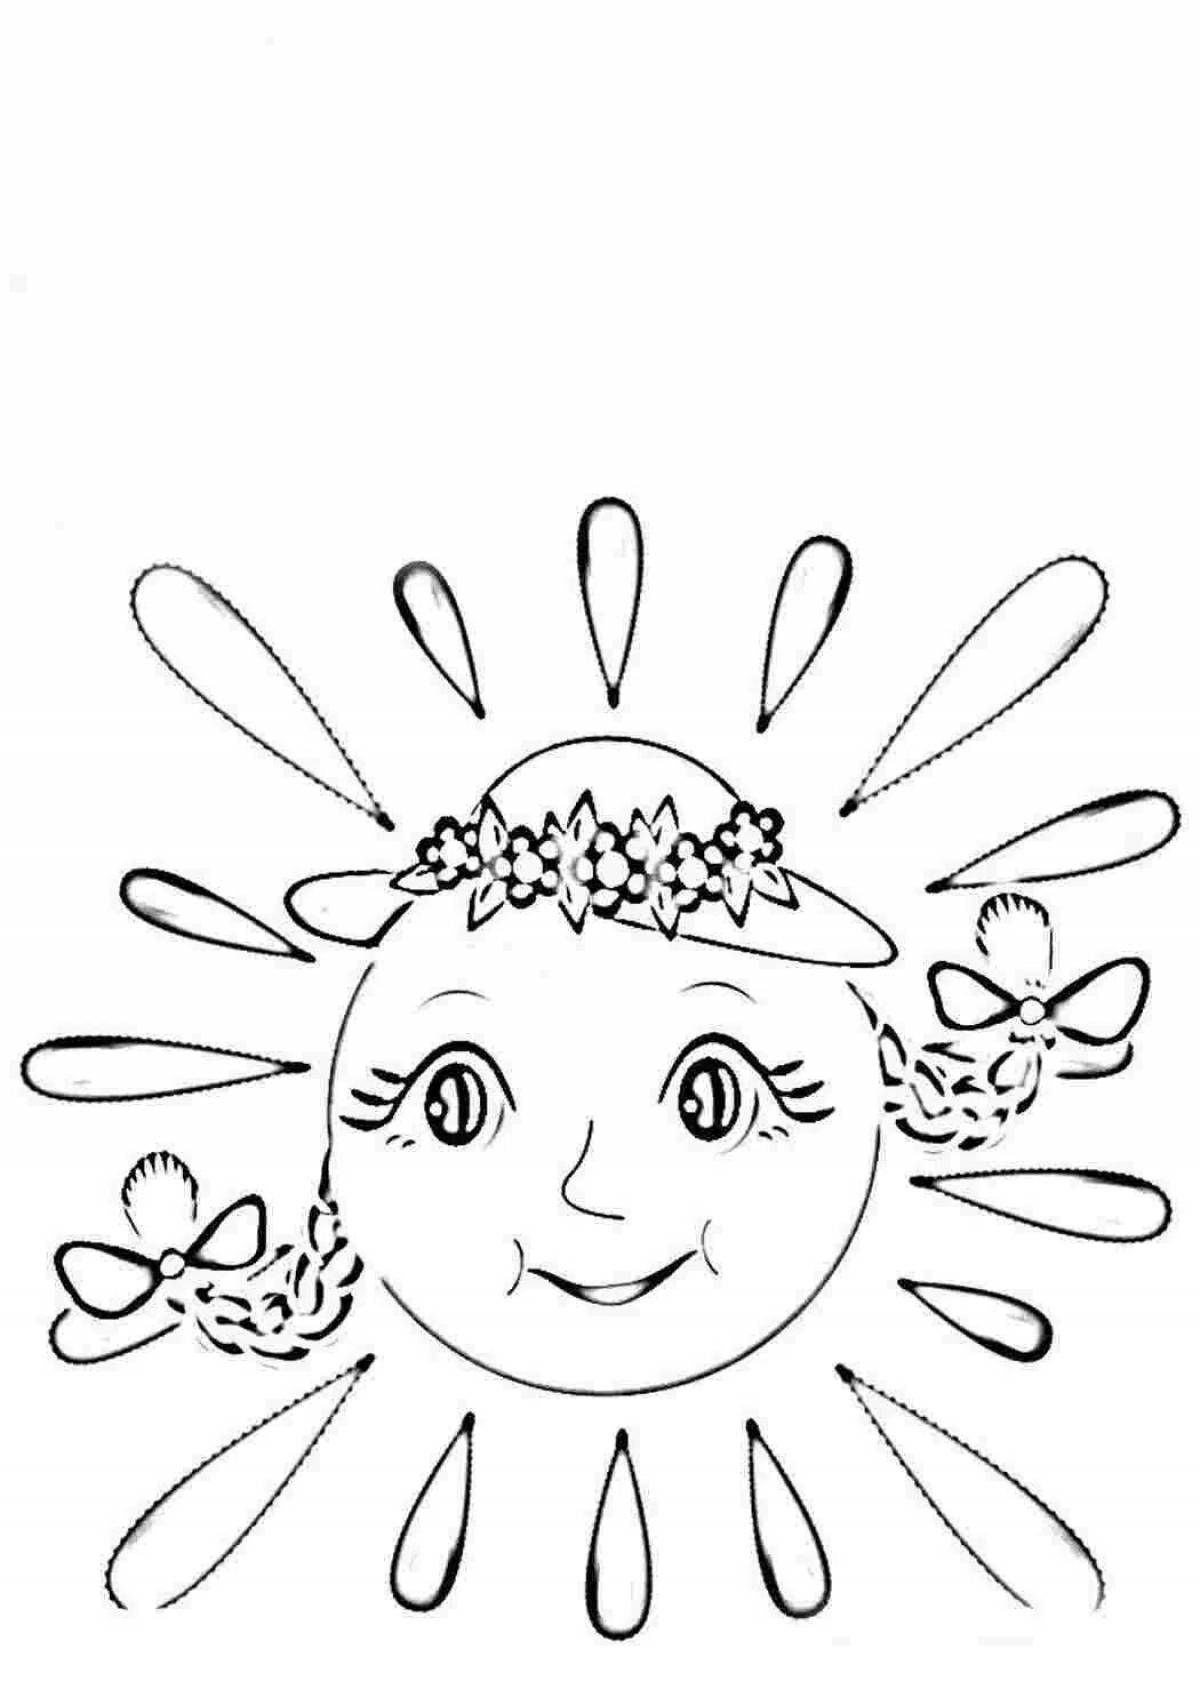 Сказочная раскраска солнце для детей